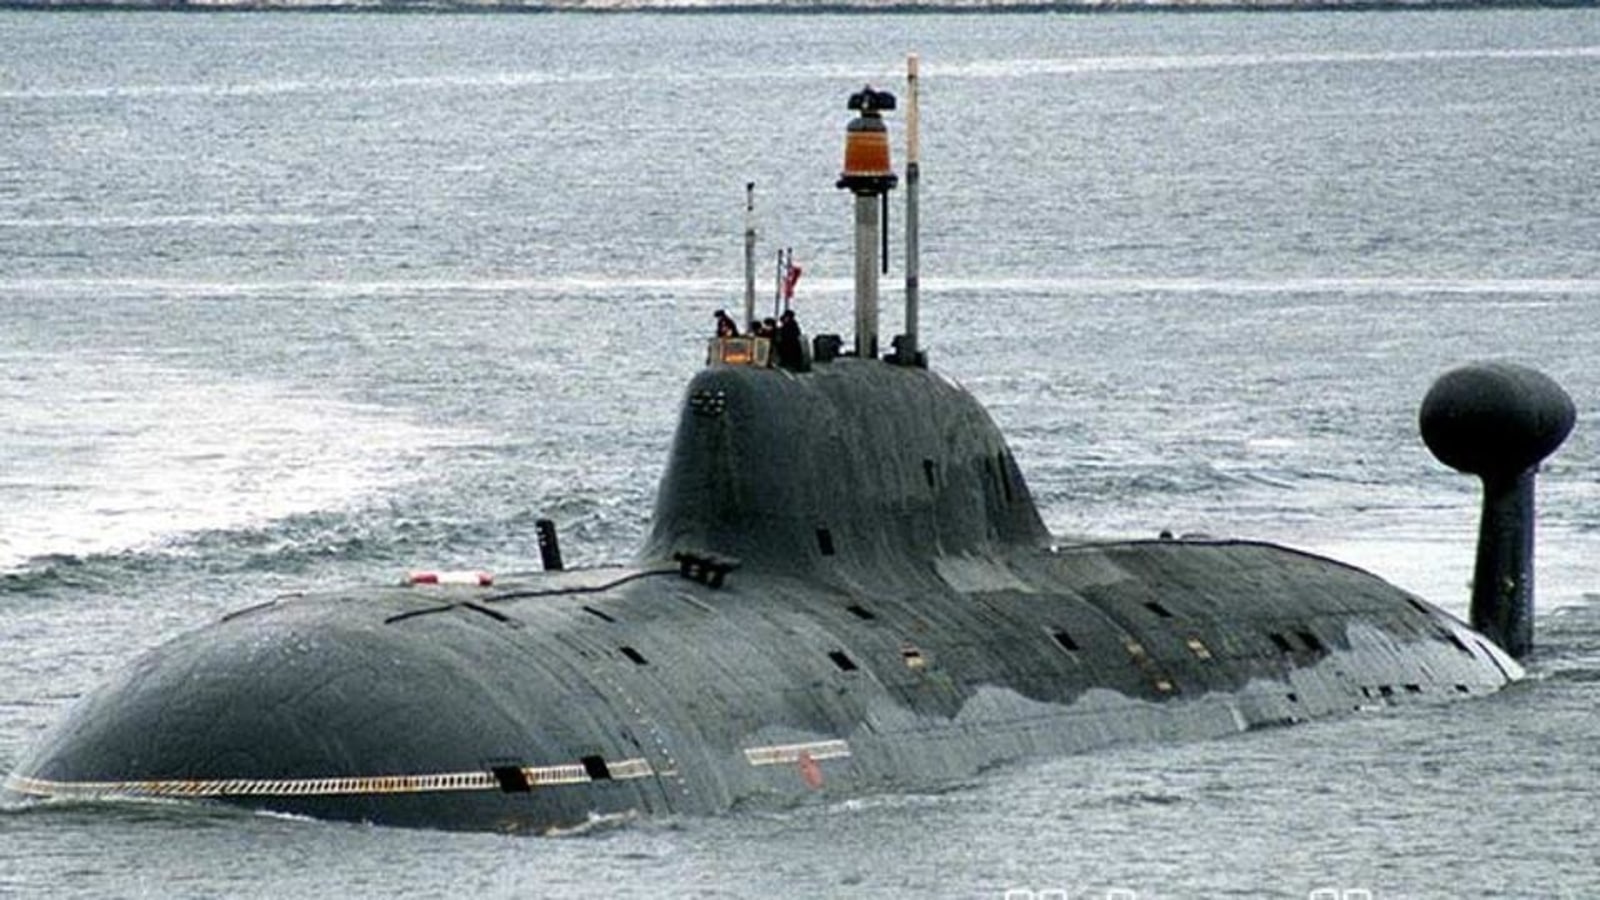 world of warships news on submarines